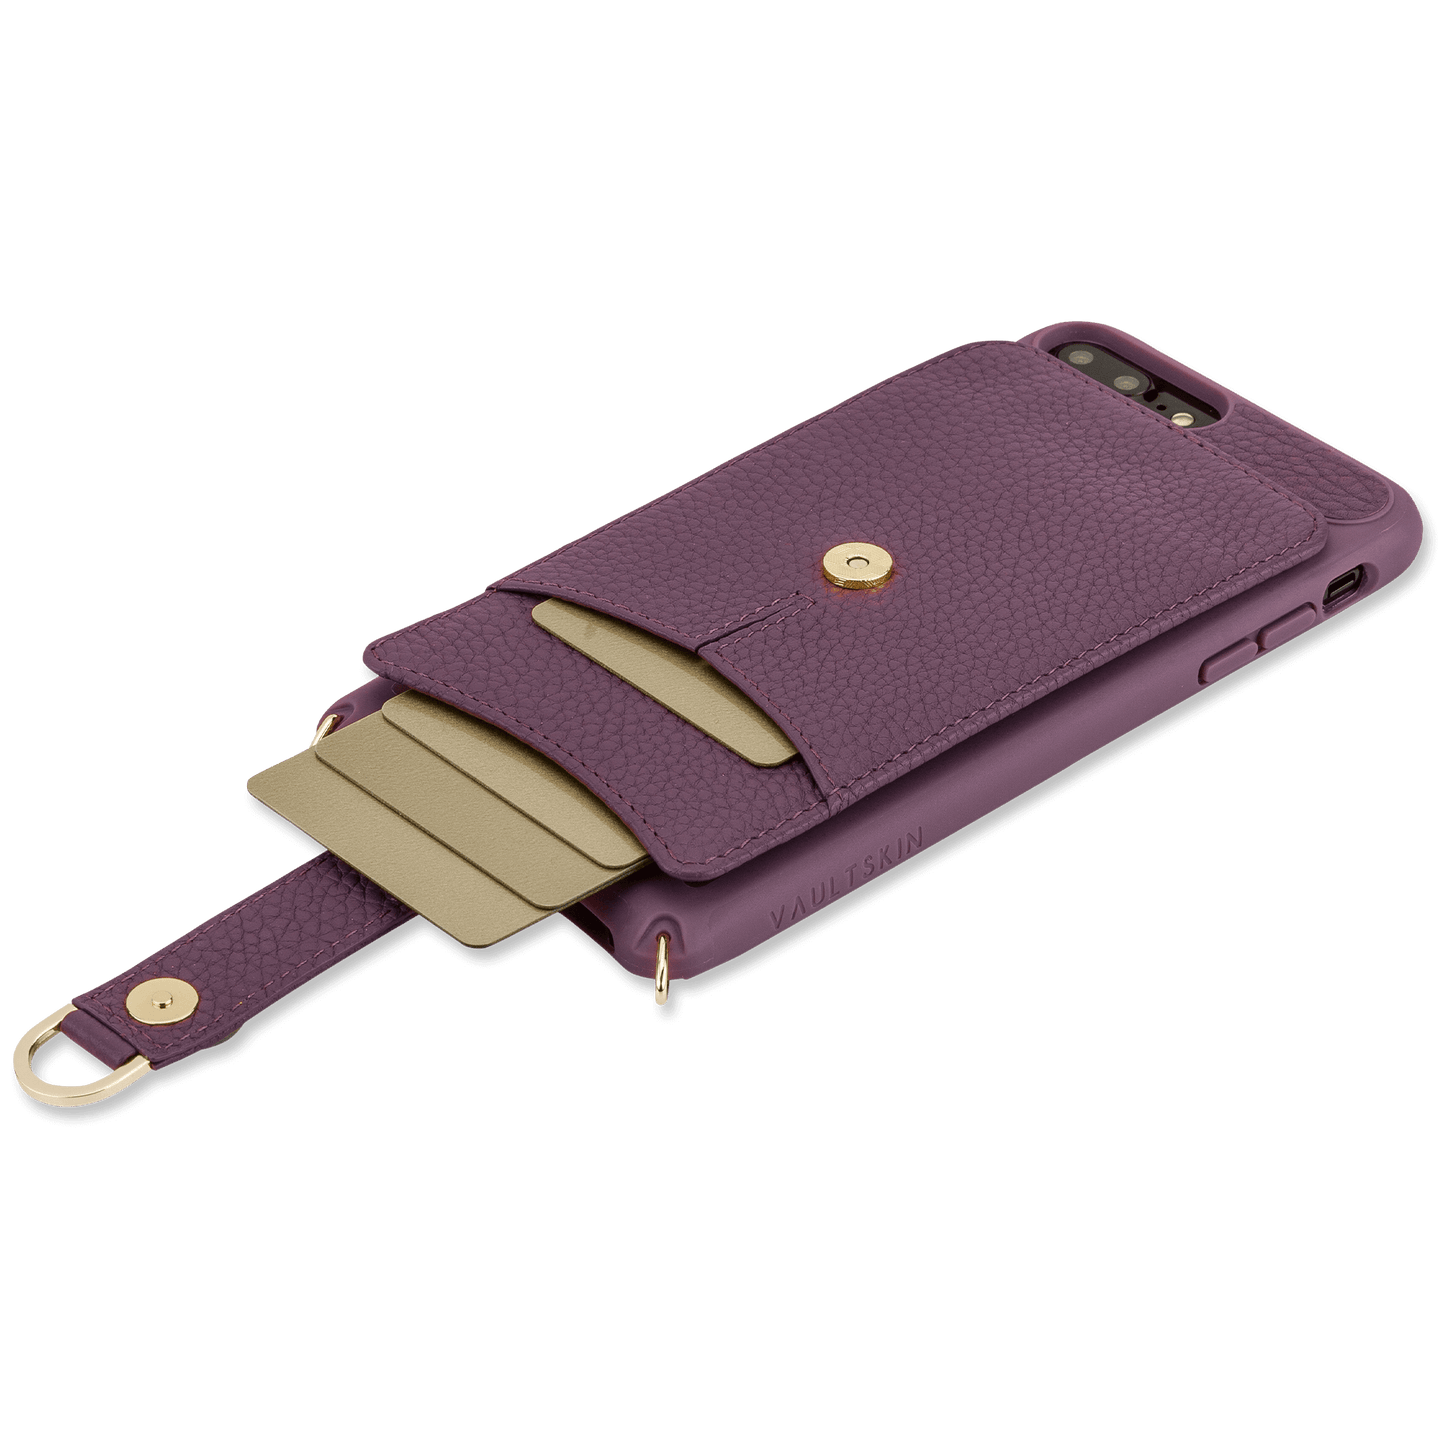 Practical iPhone 7 Plus Leather Case